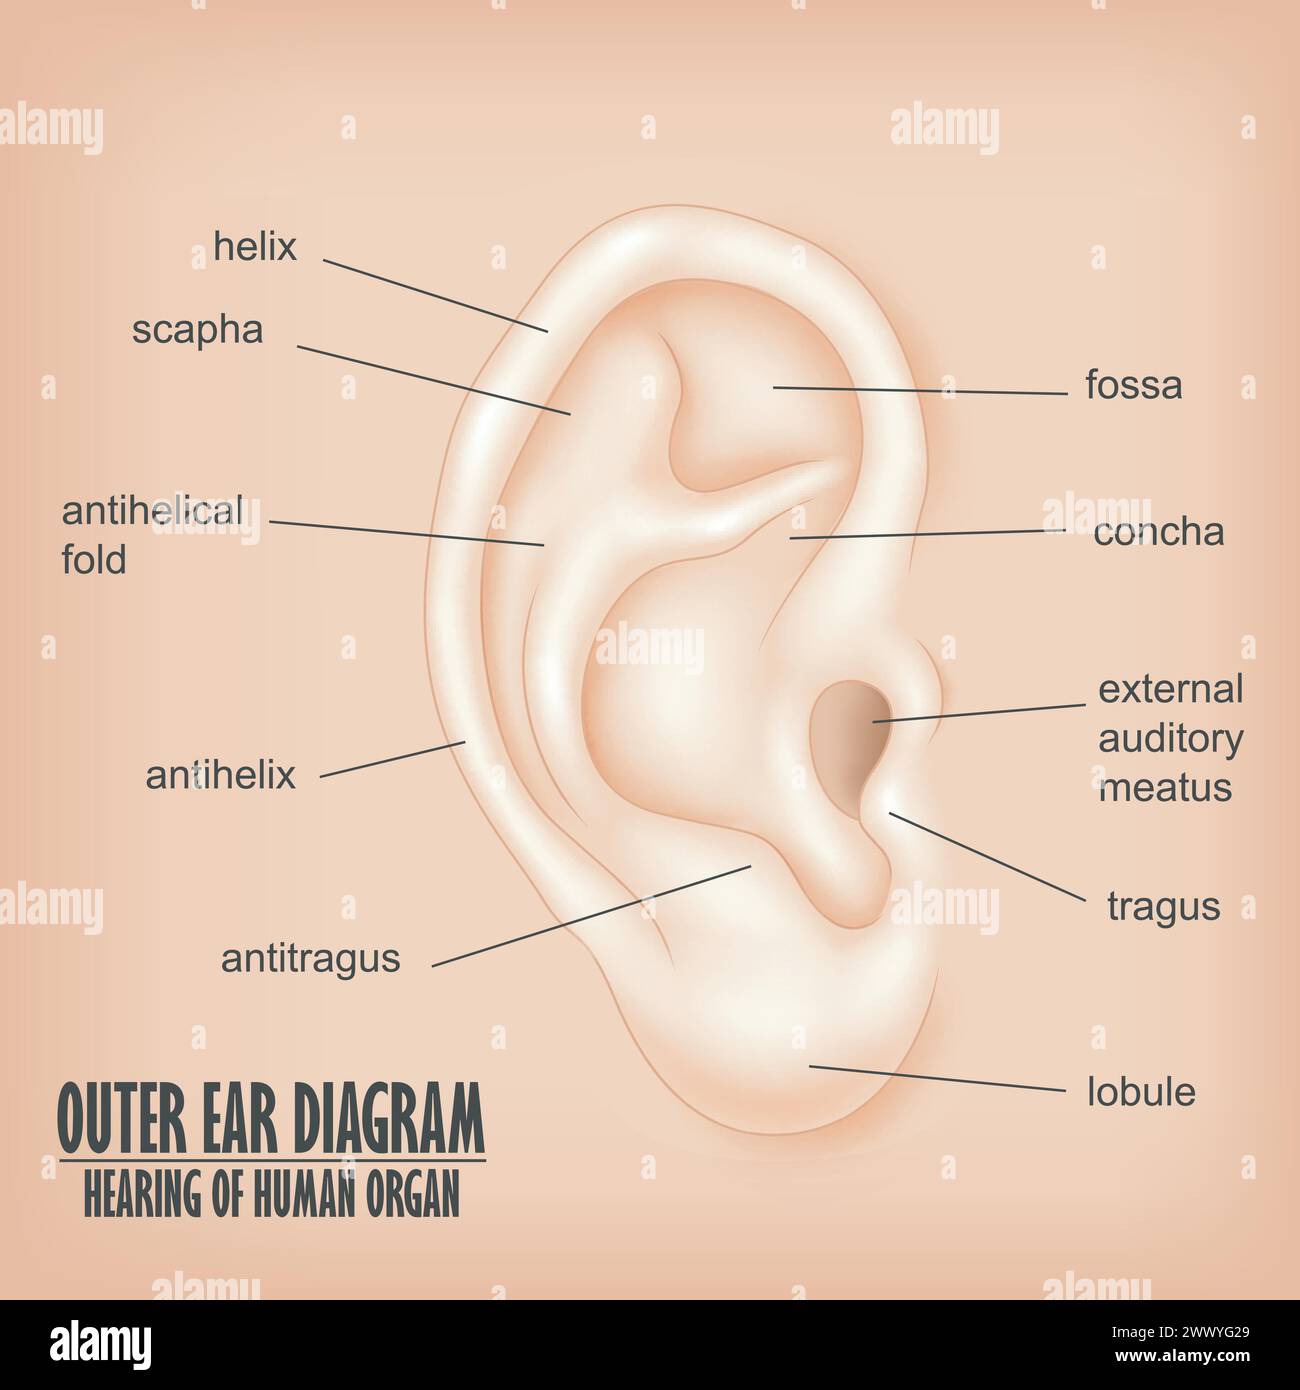 Ear Diagram Hearing of Human Organ, Vector Illustration Illustrazione Vettoriale